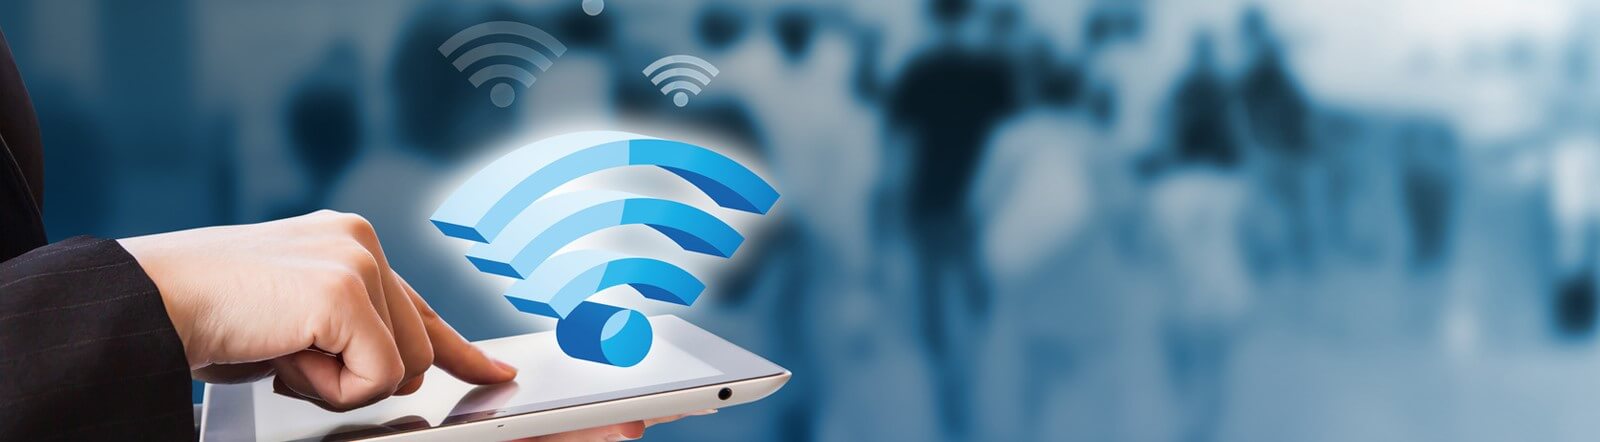 Maraki and Ctelecoms manages wireless